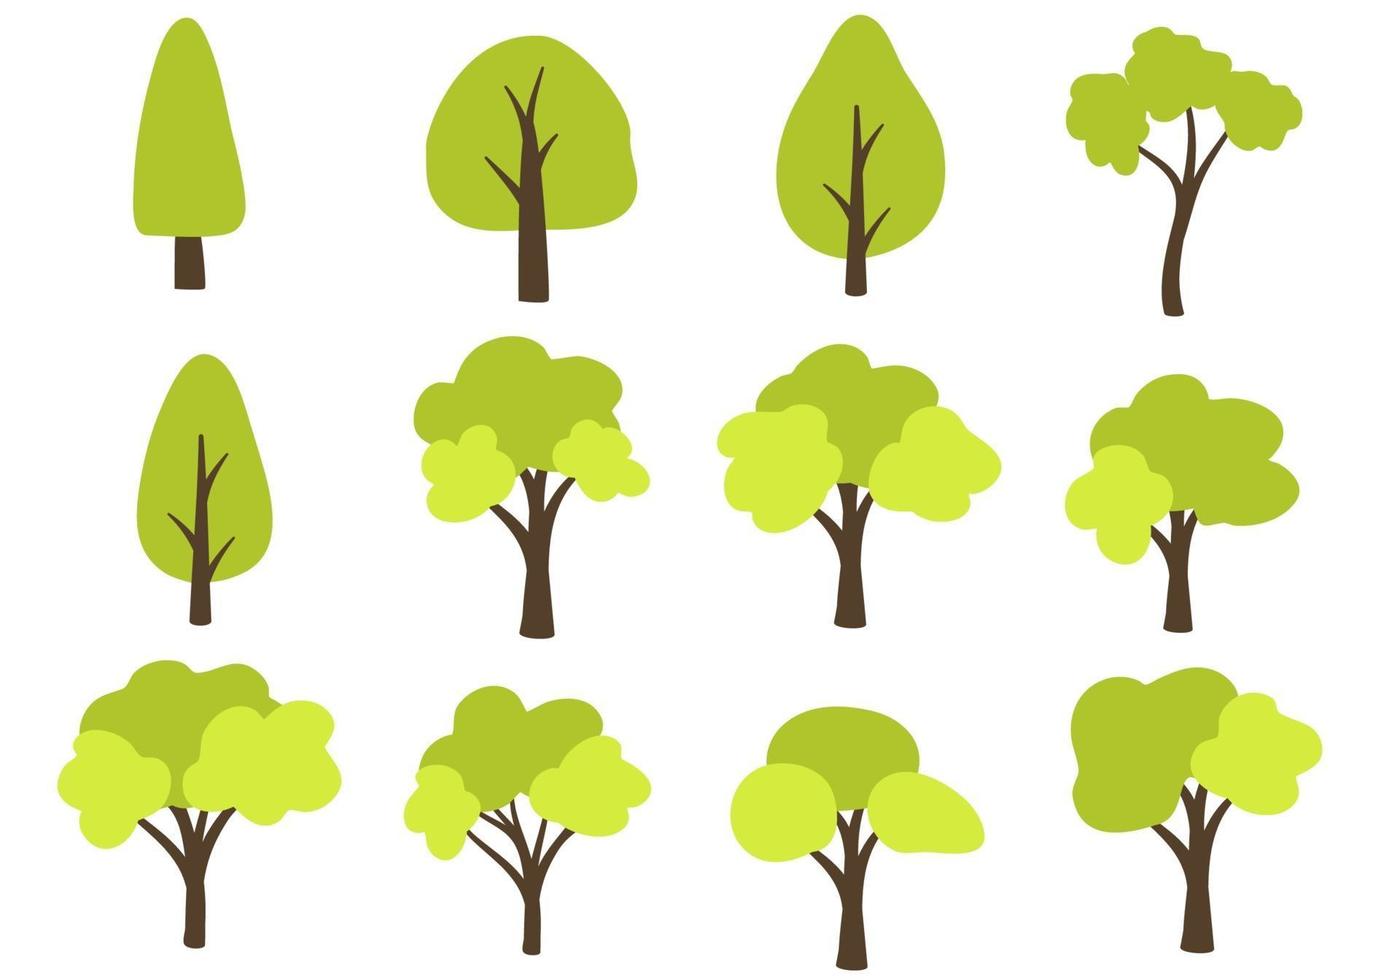 platte boom bos illustratie vector